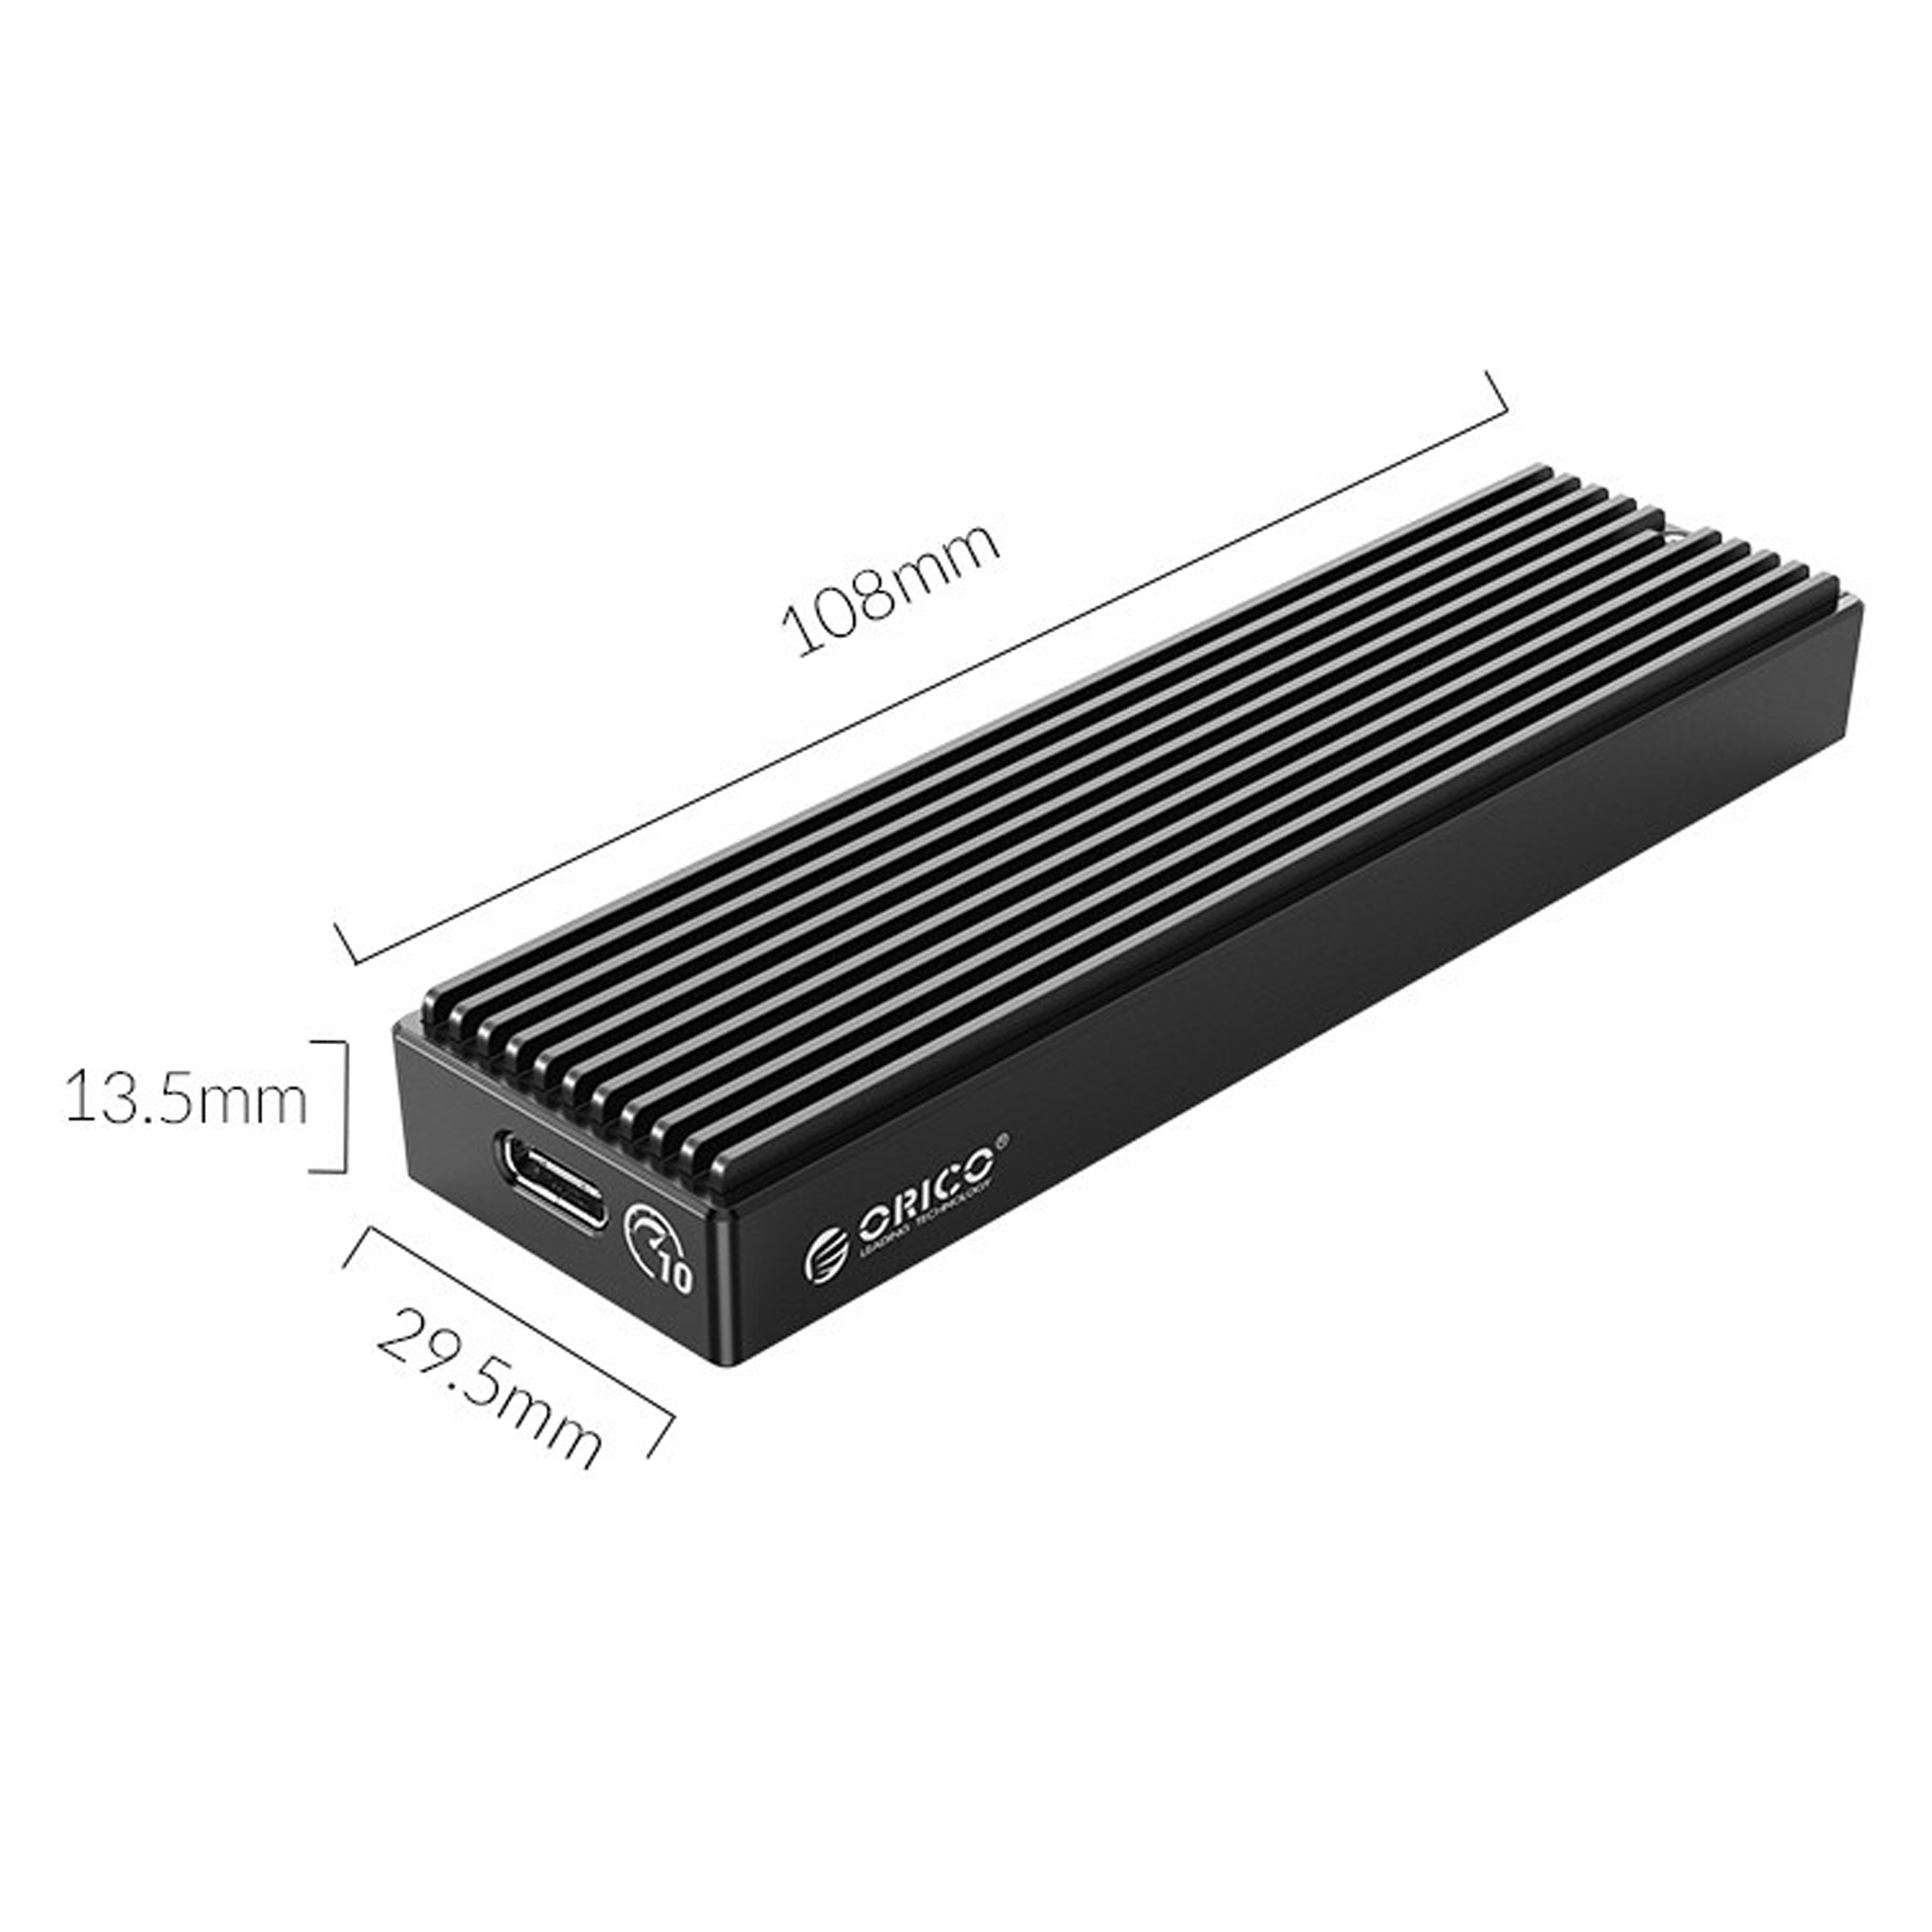 Hộp ổ cứng ORICO NVMe M.2 SSD USB 3.1 Gen 2 - Đen (M2PV-C3-BK-HW)